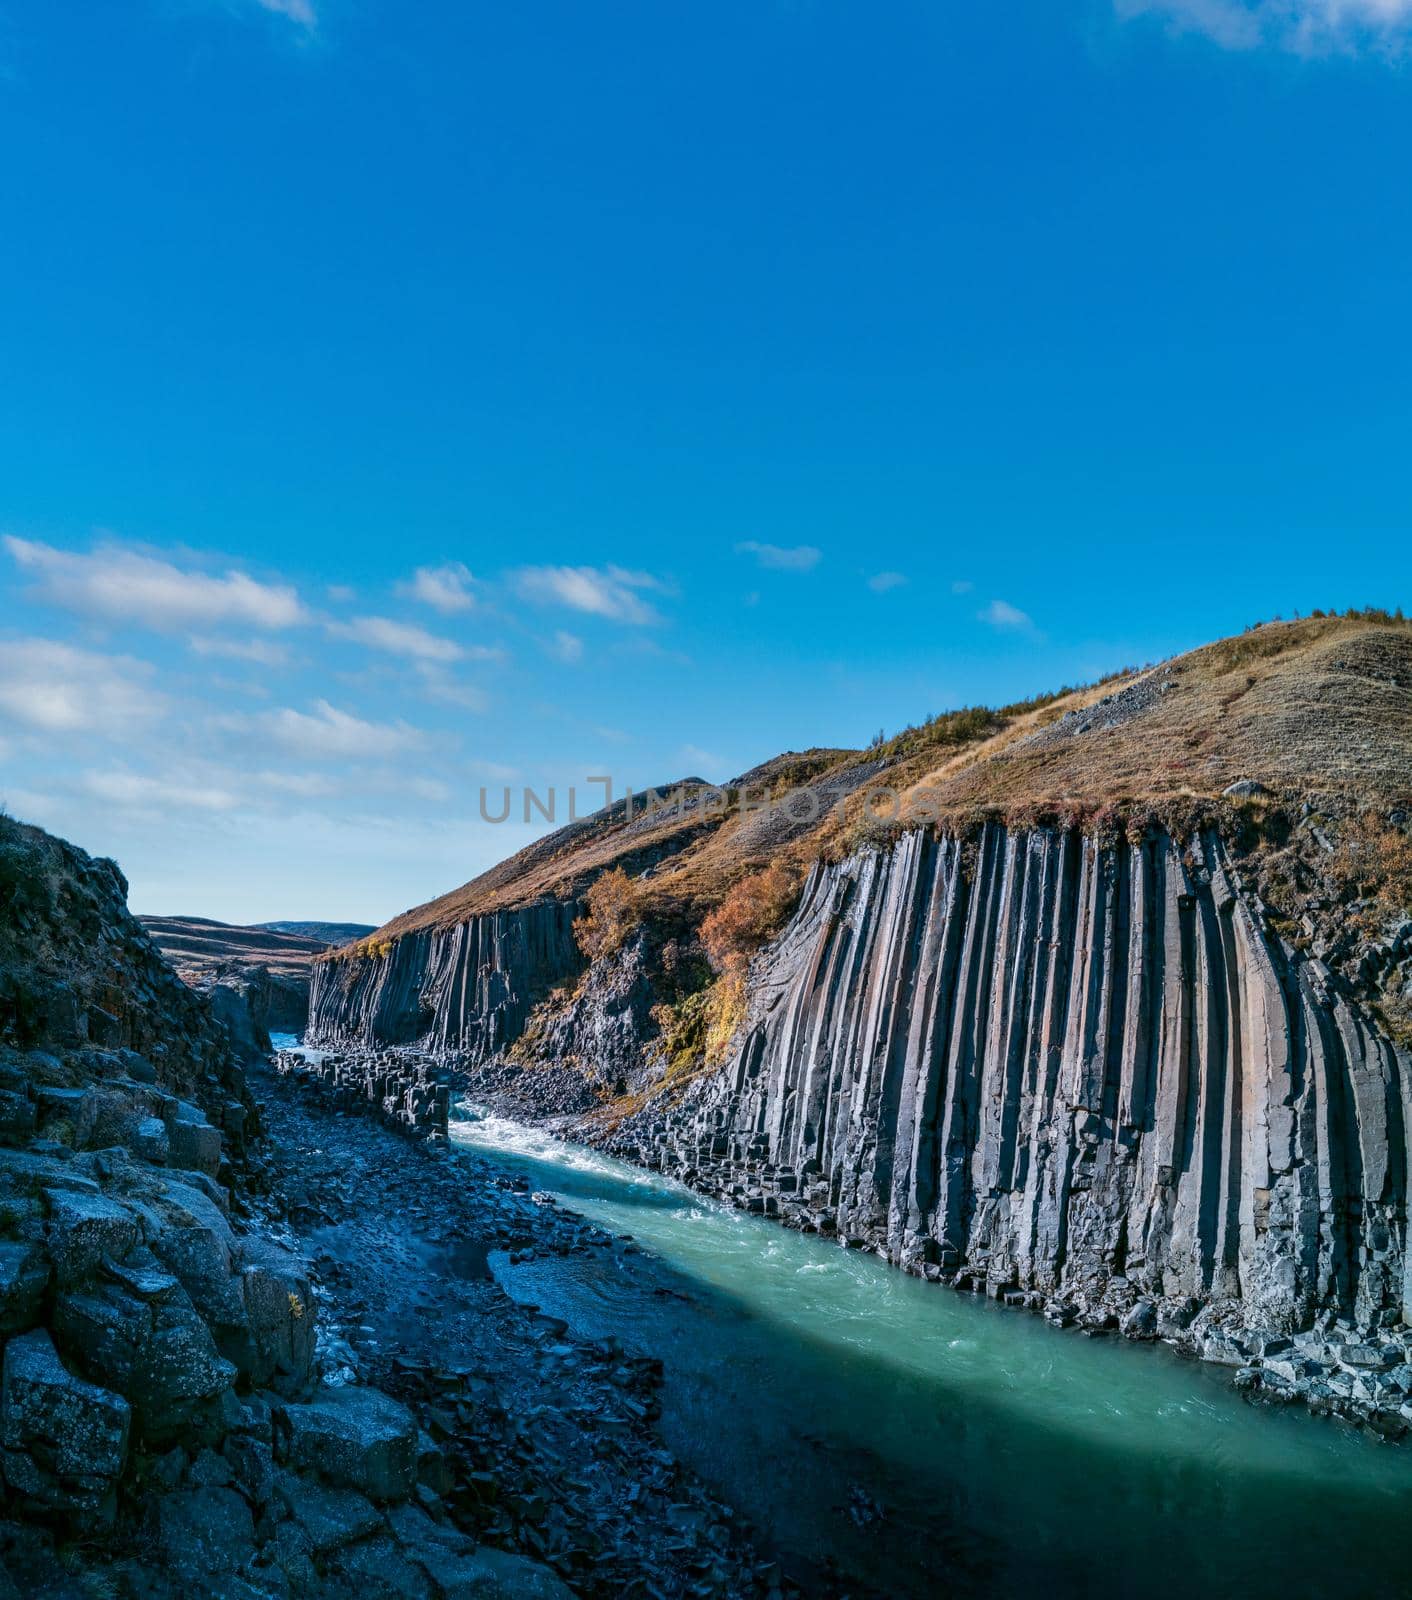 Fjadrargljufur basaltic canyon, river and viewpoint panorama by FerradalFCG